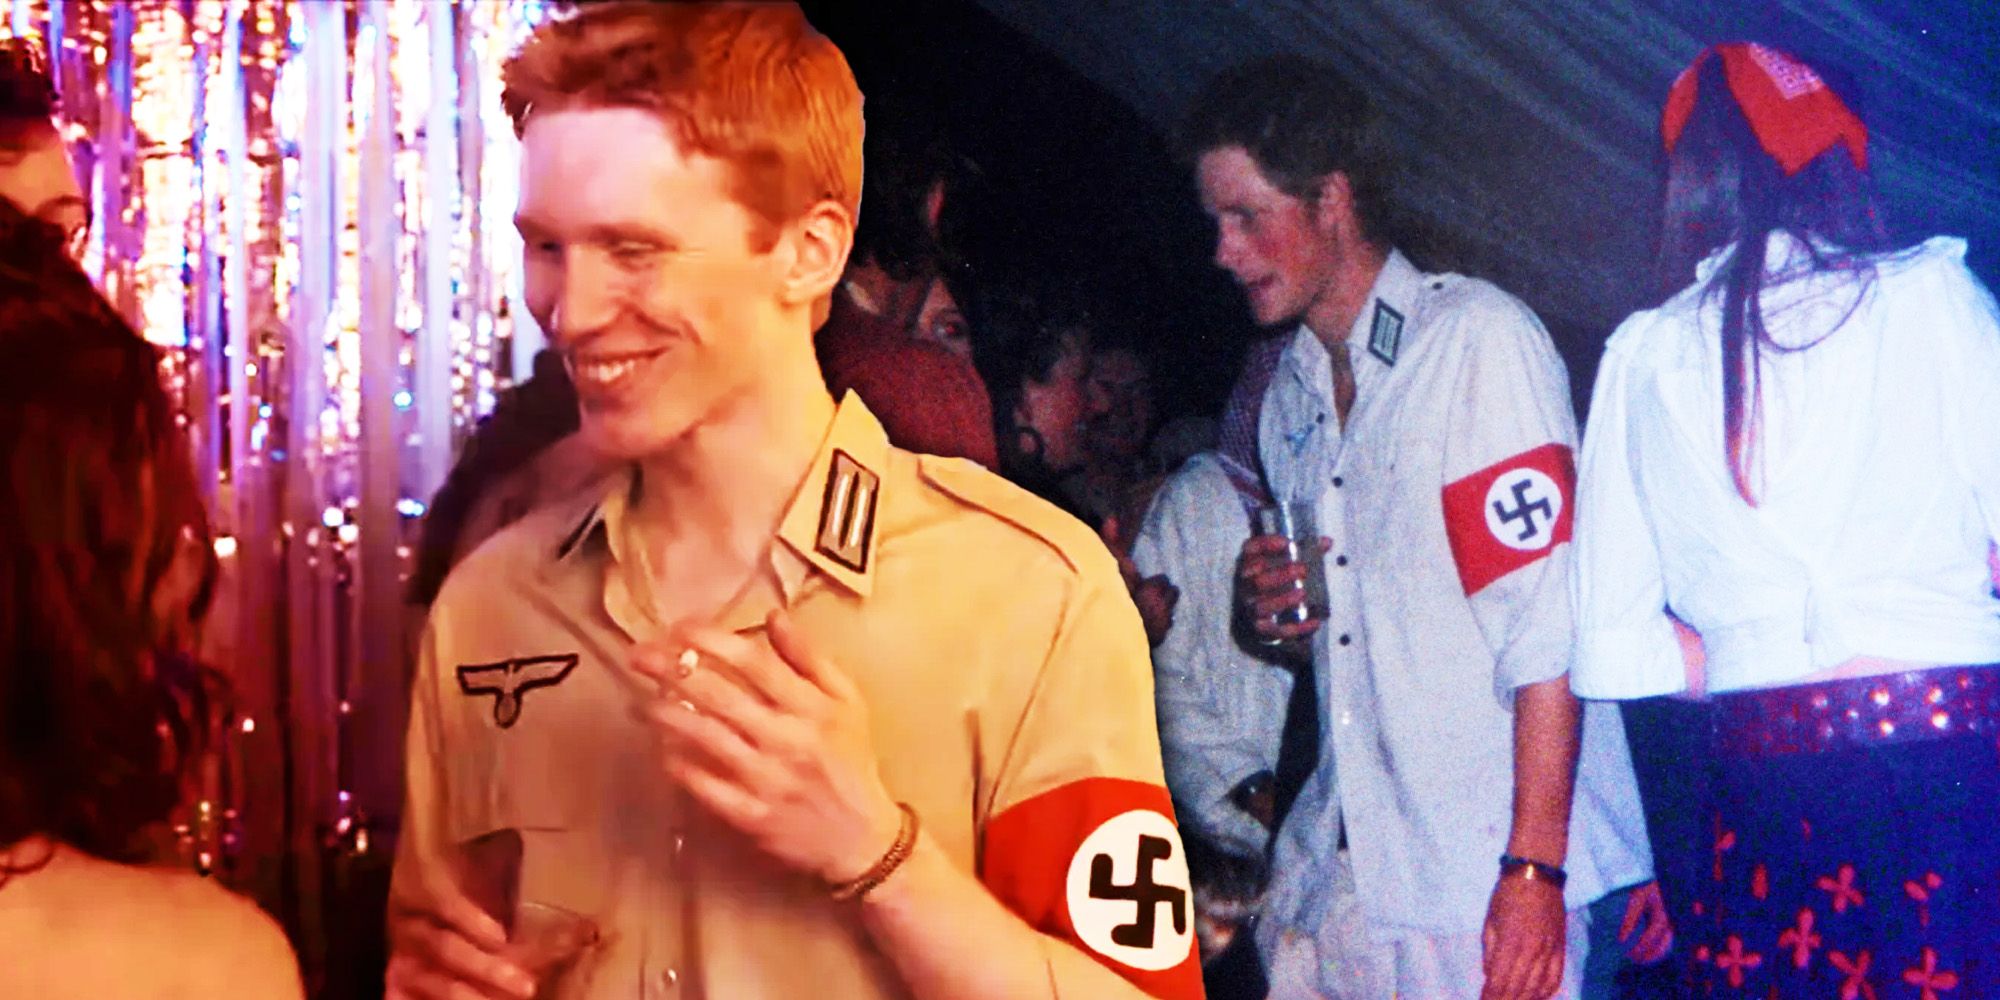 the-crown-prince-harry-nazi-uniform-real-life